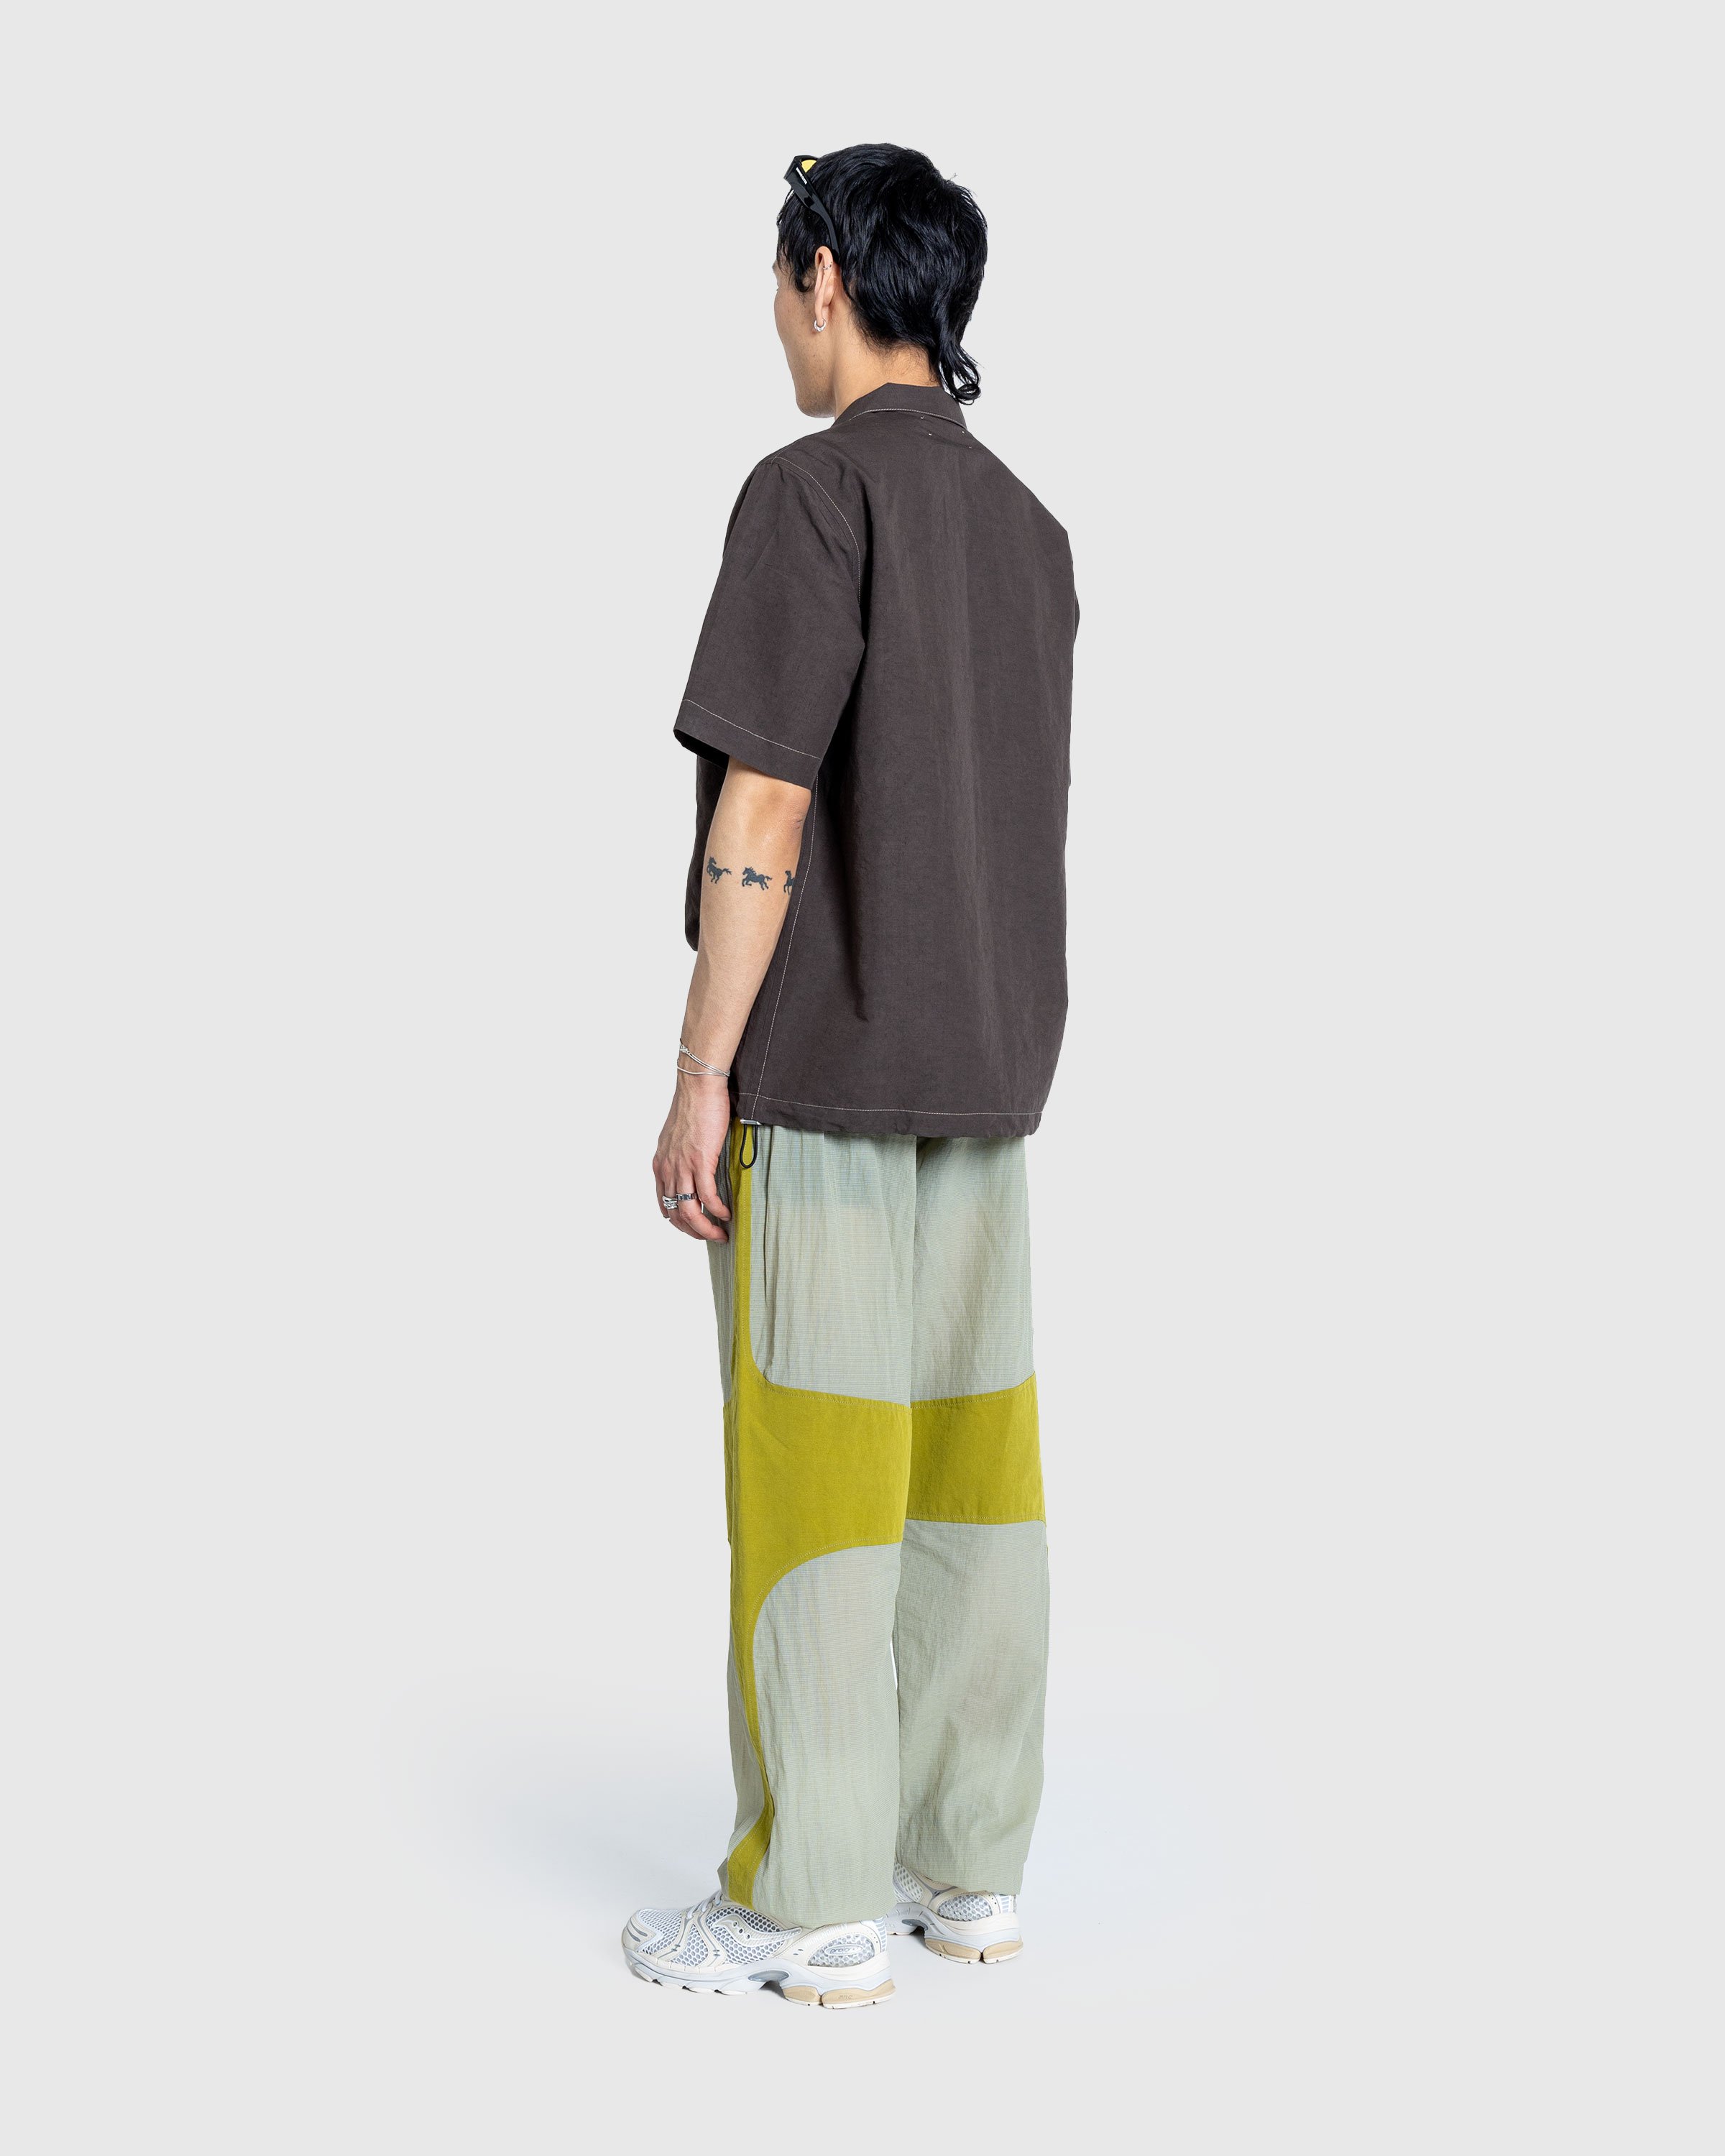 RANRA - IS KAKI GREY - Clothing - Green - Image 4